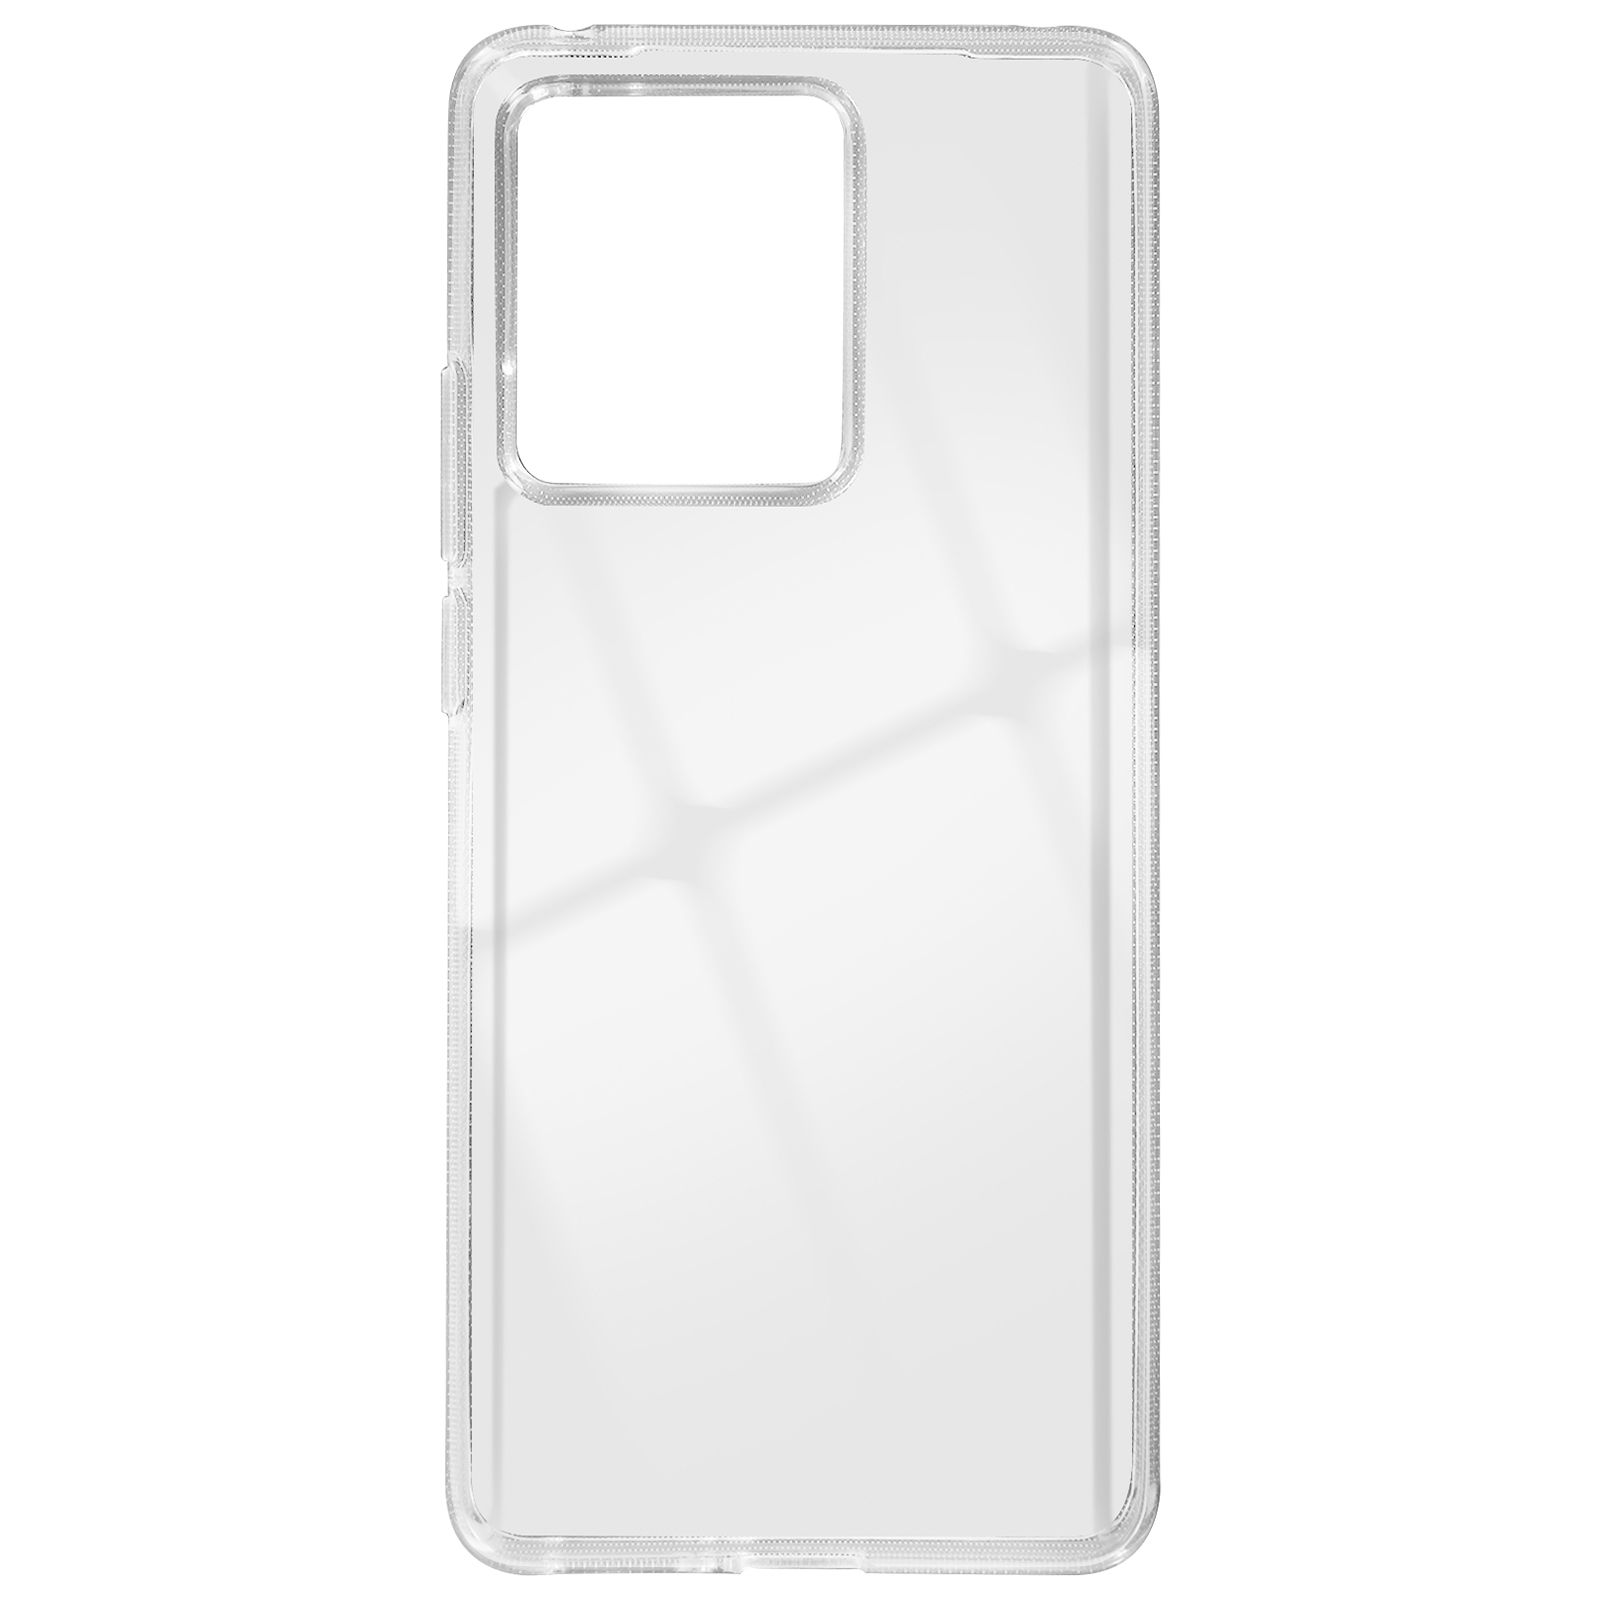 AVIZAR Pureflex Edge Motorola, Transparent Series, Backcover, Series 40,